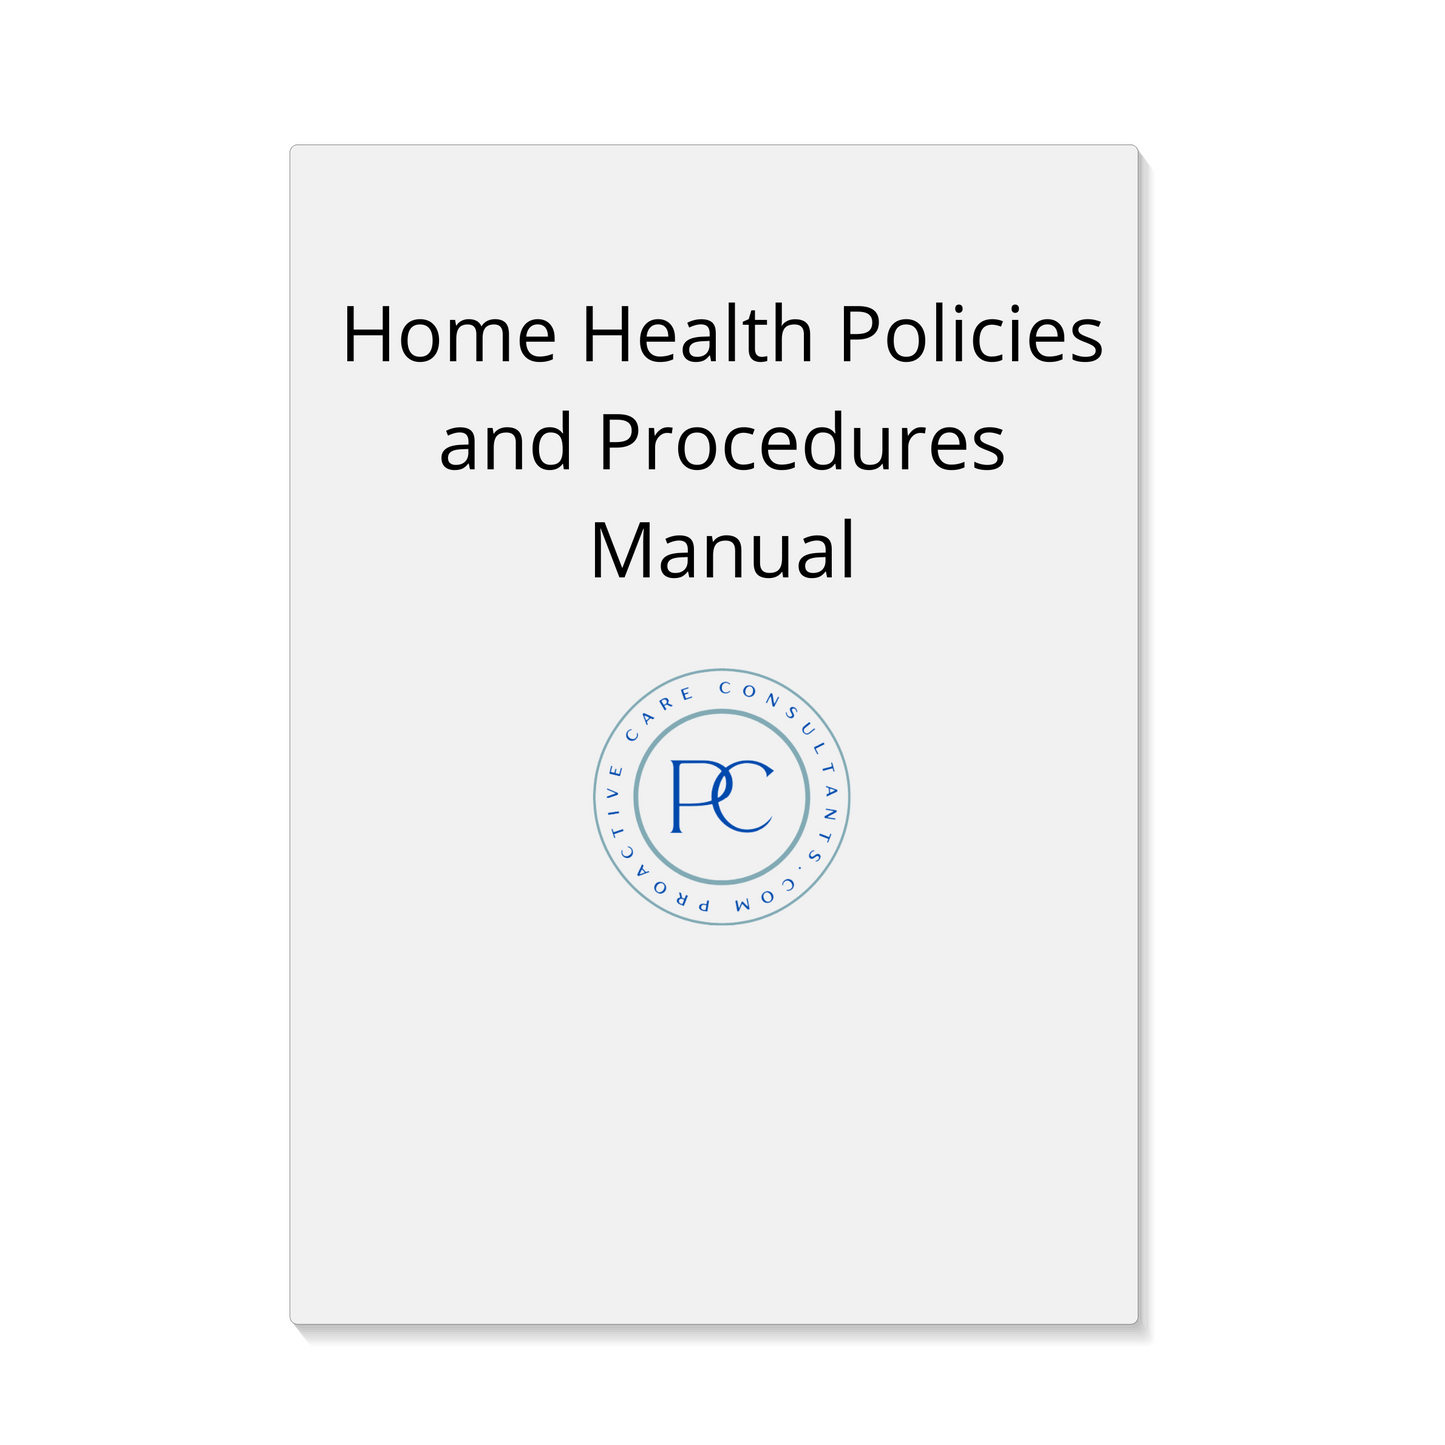 Home Health Policies and Procedures Manual eBook